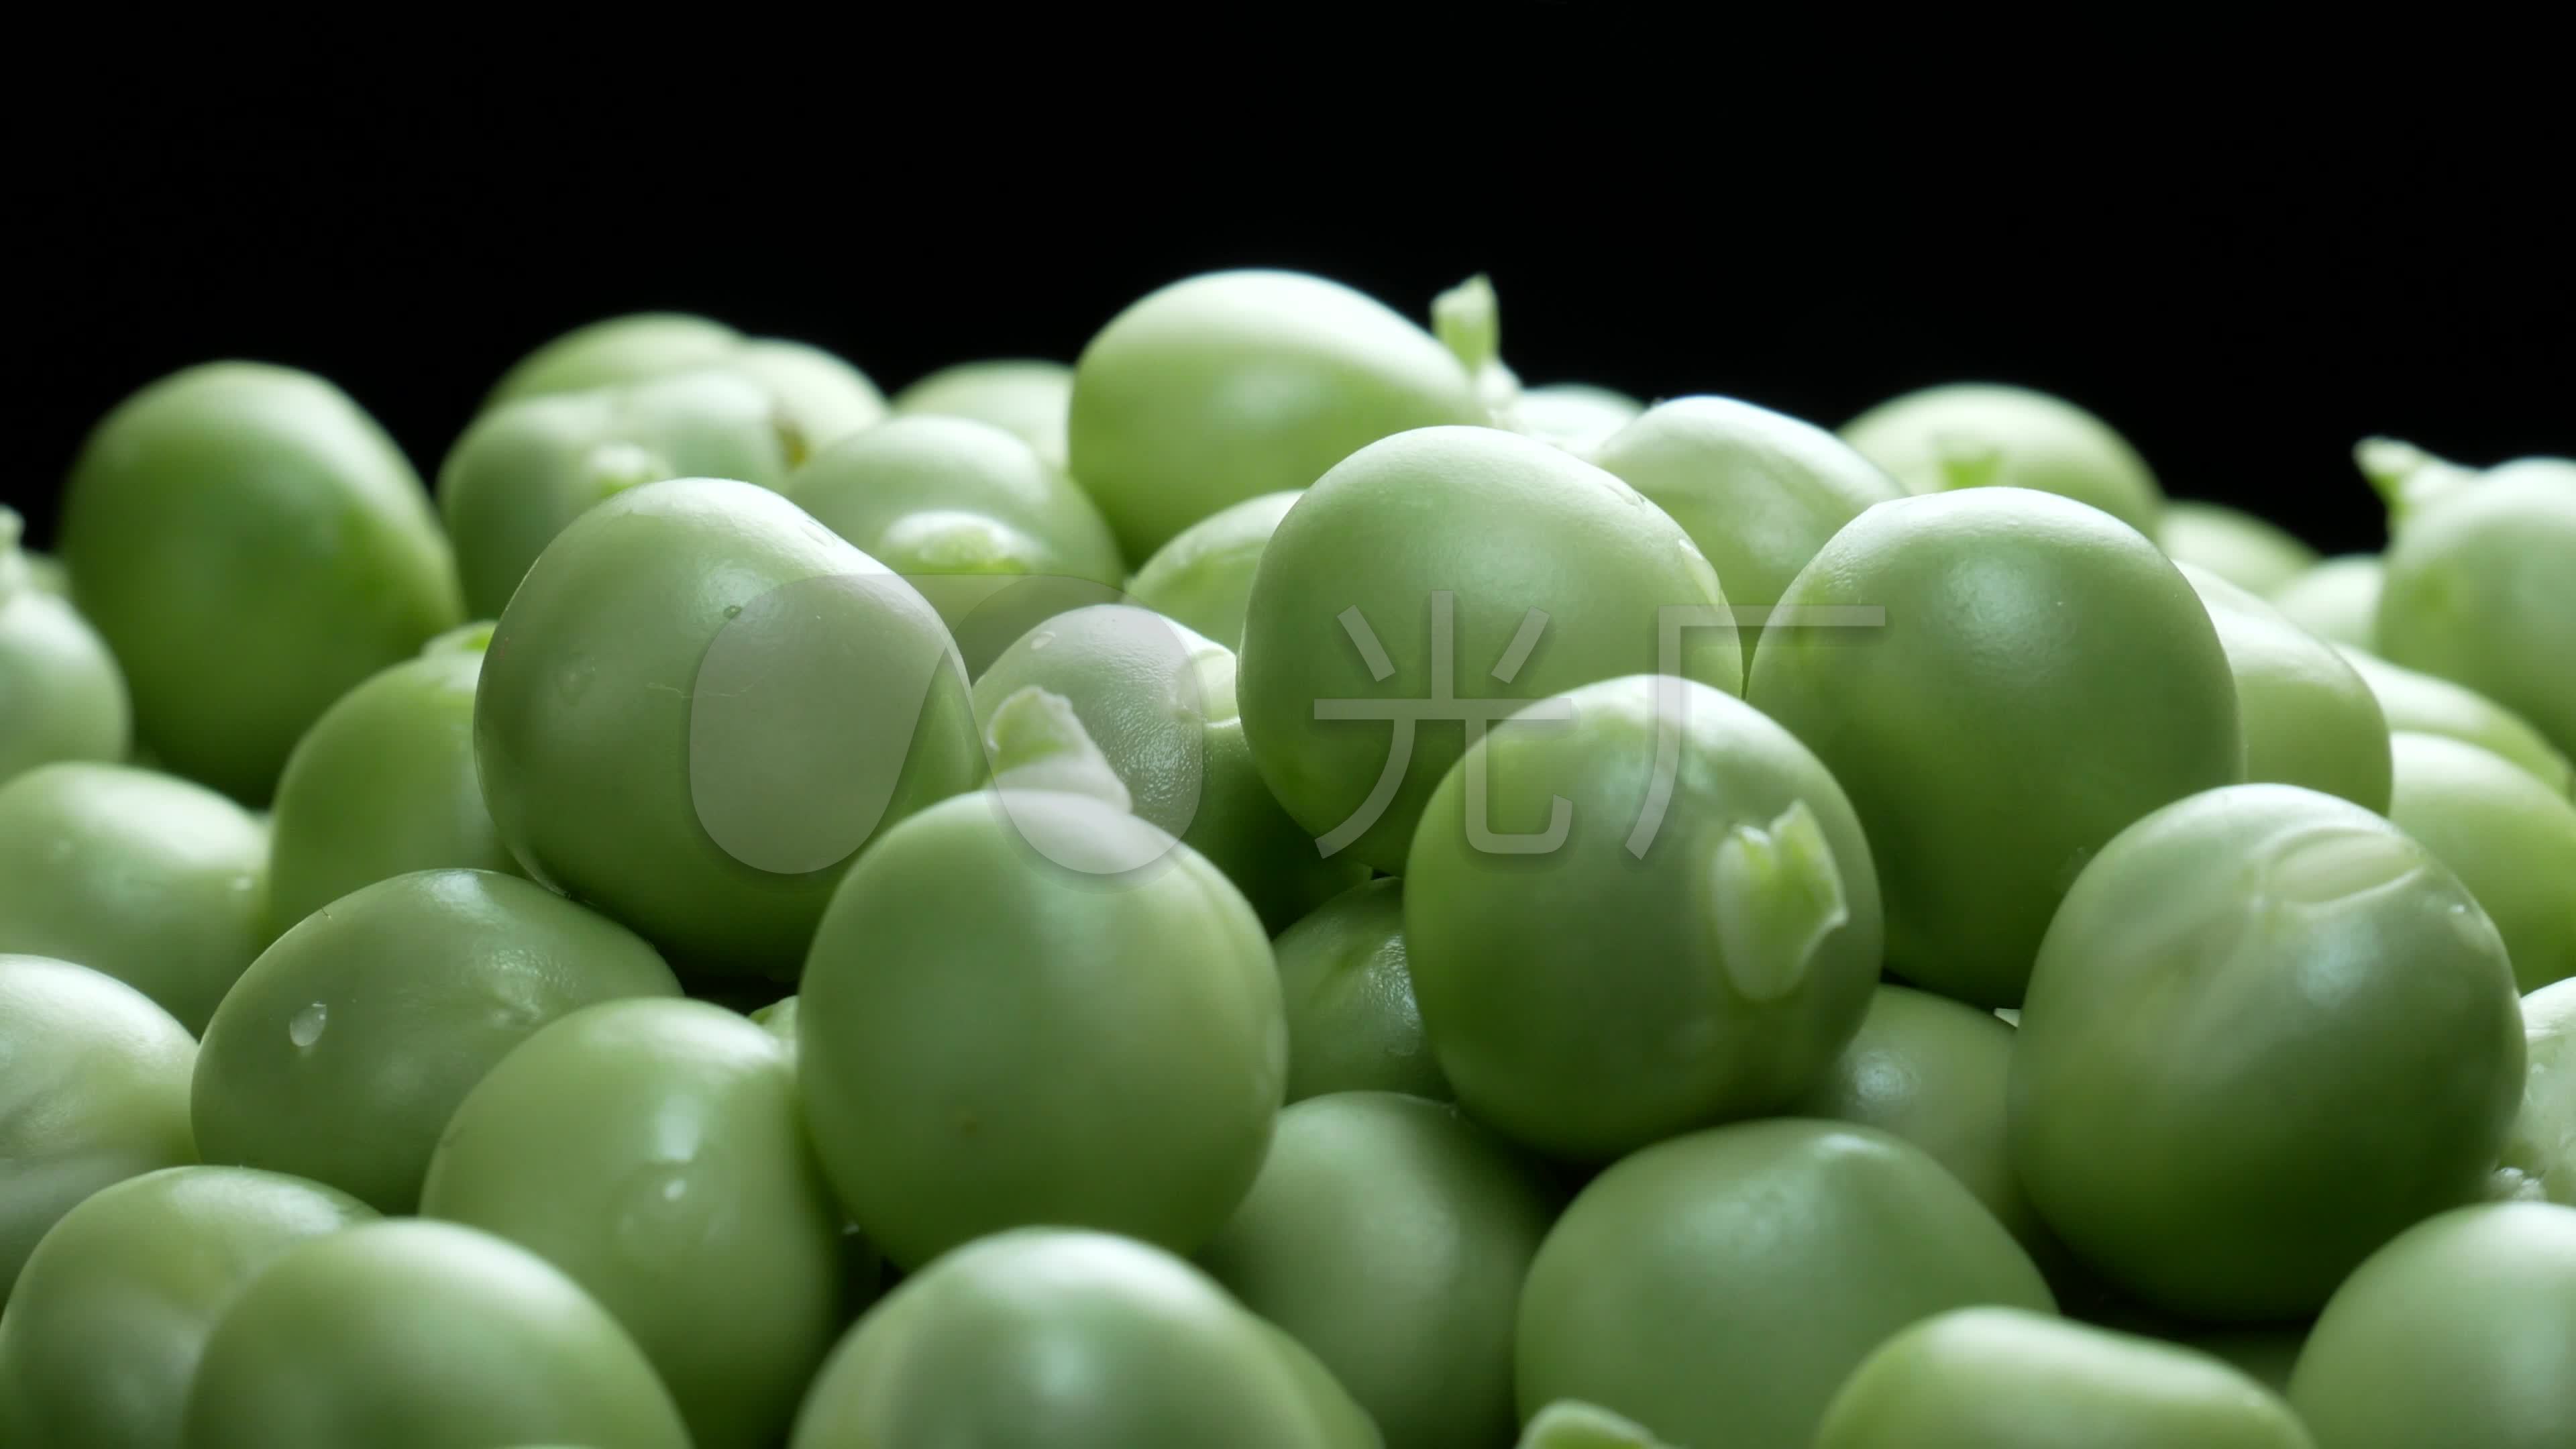 Green peas青豆豌豆蔬菜壁纸